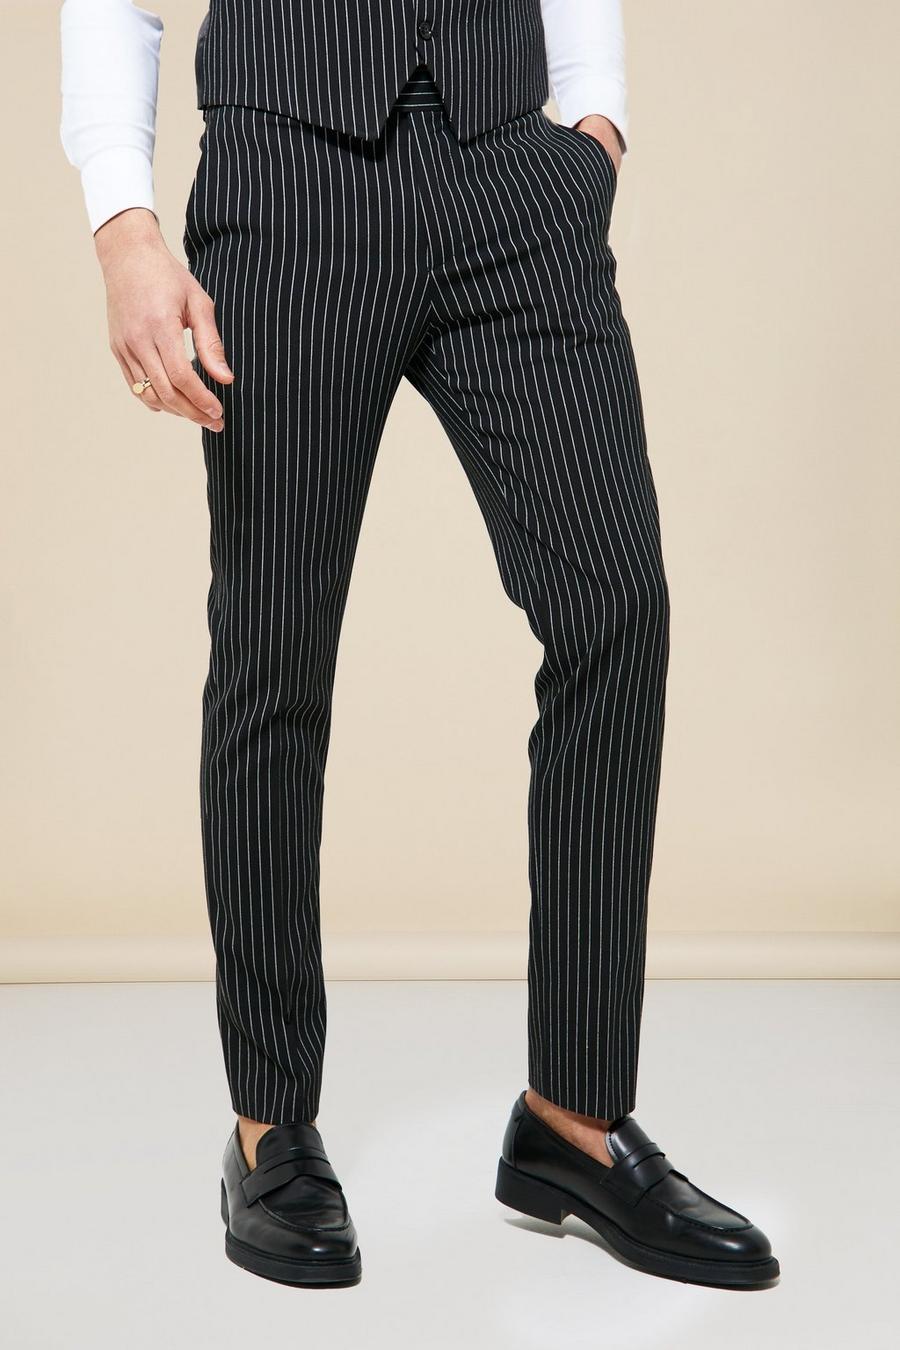 Blend slacks discount 98% MEN FASHION Trousers Straight Gray 